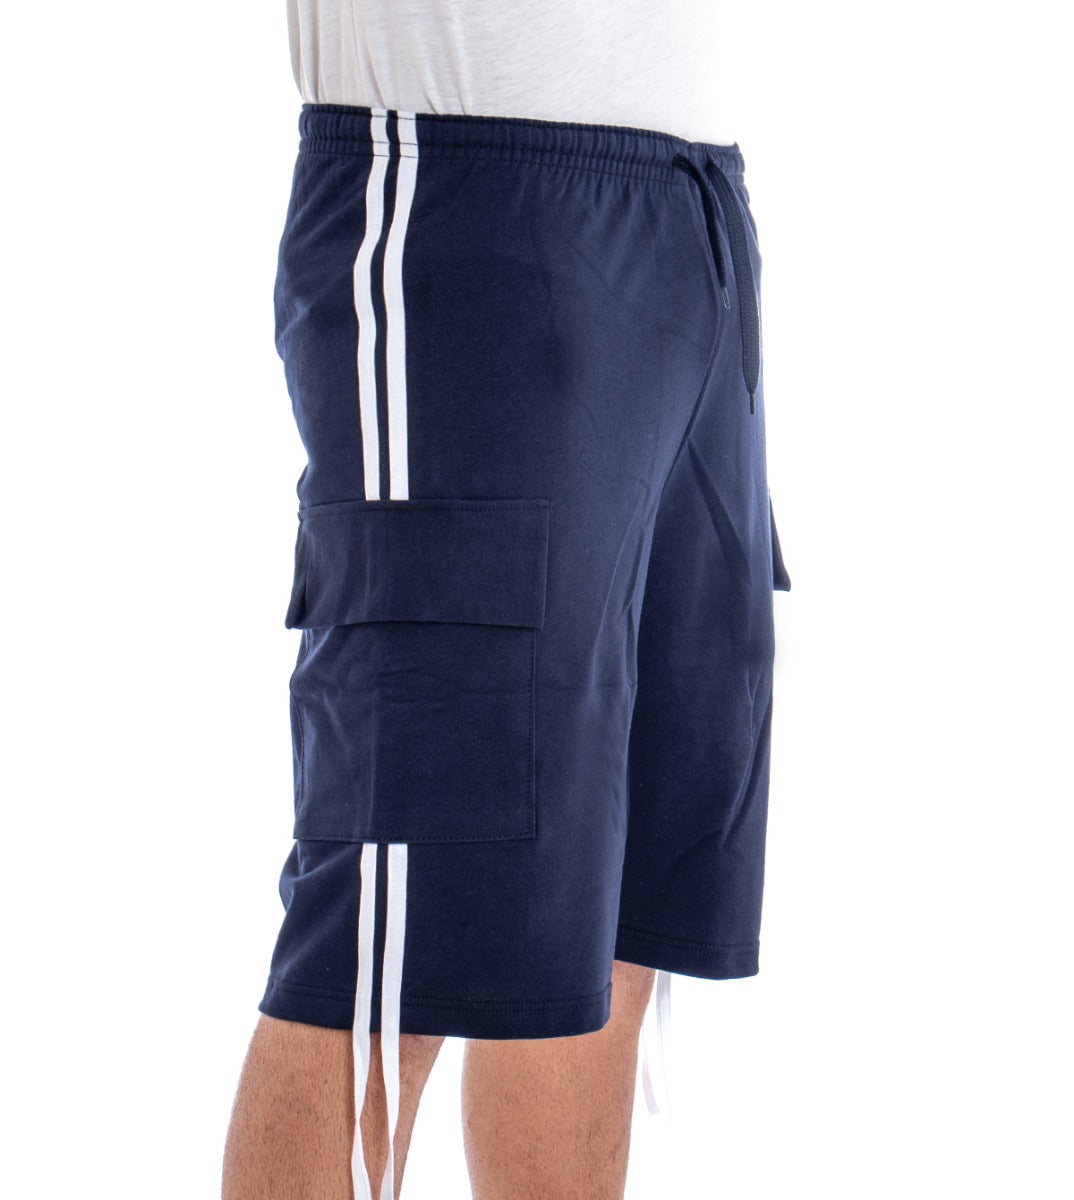 Bermuda Shorts Men's Short Tracksuit Sport Relax Comfort Blue GIOSAL-PC1825A